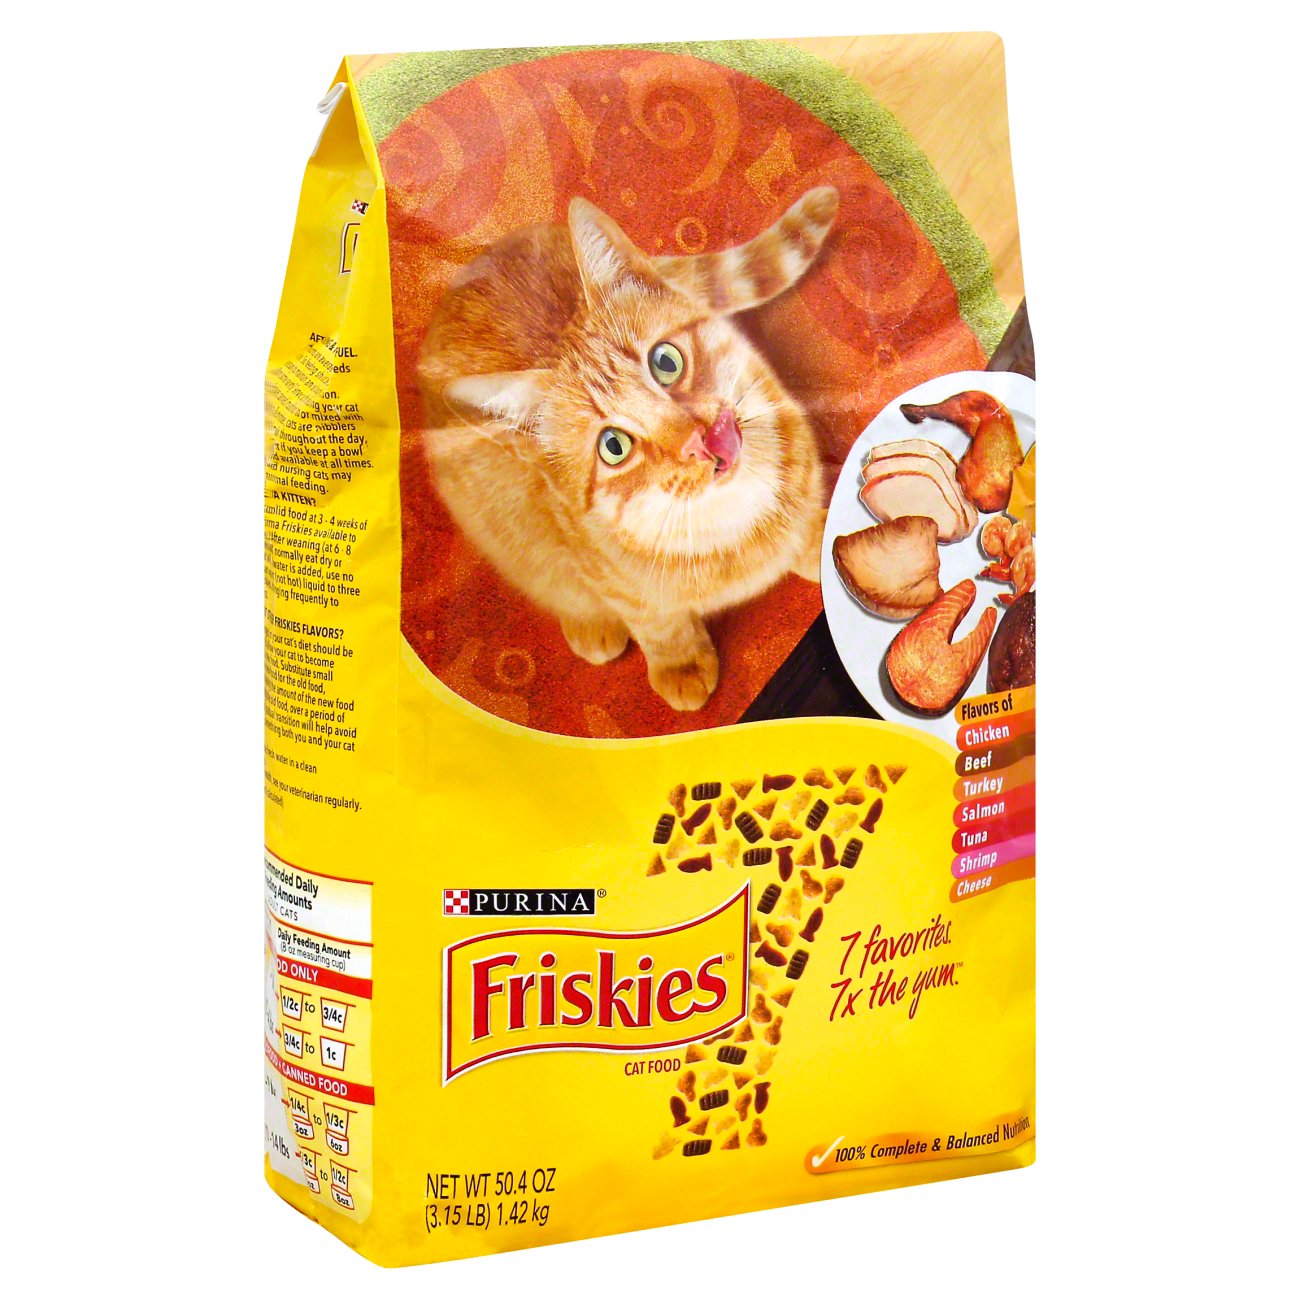 Purina Friskies 7 Favorites Cat Food Shop Food at HEB